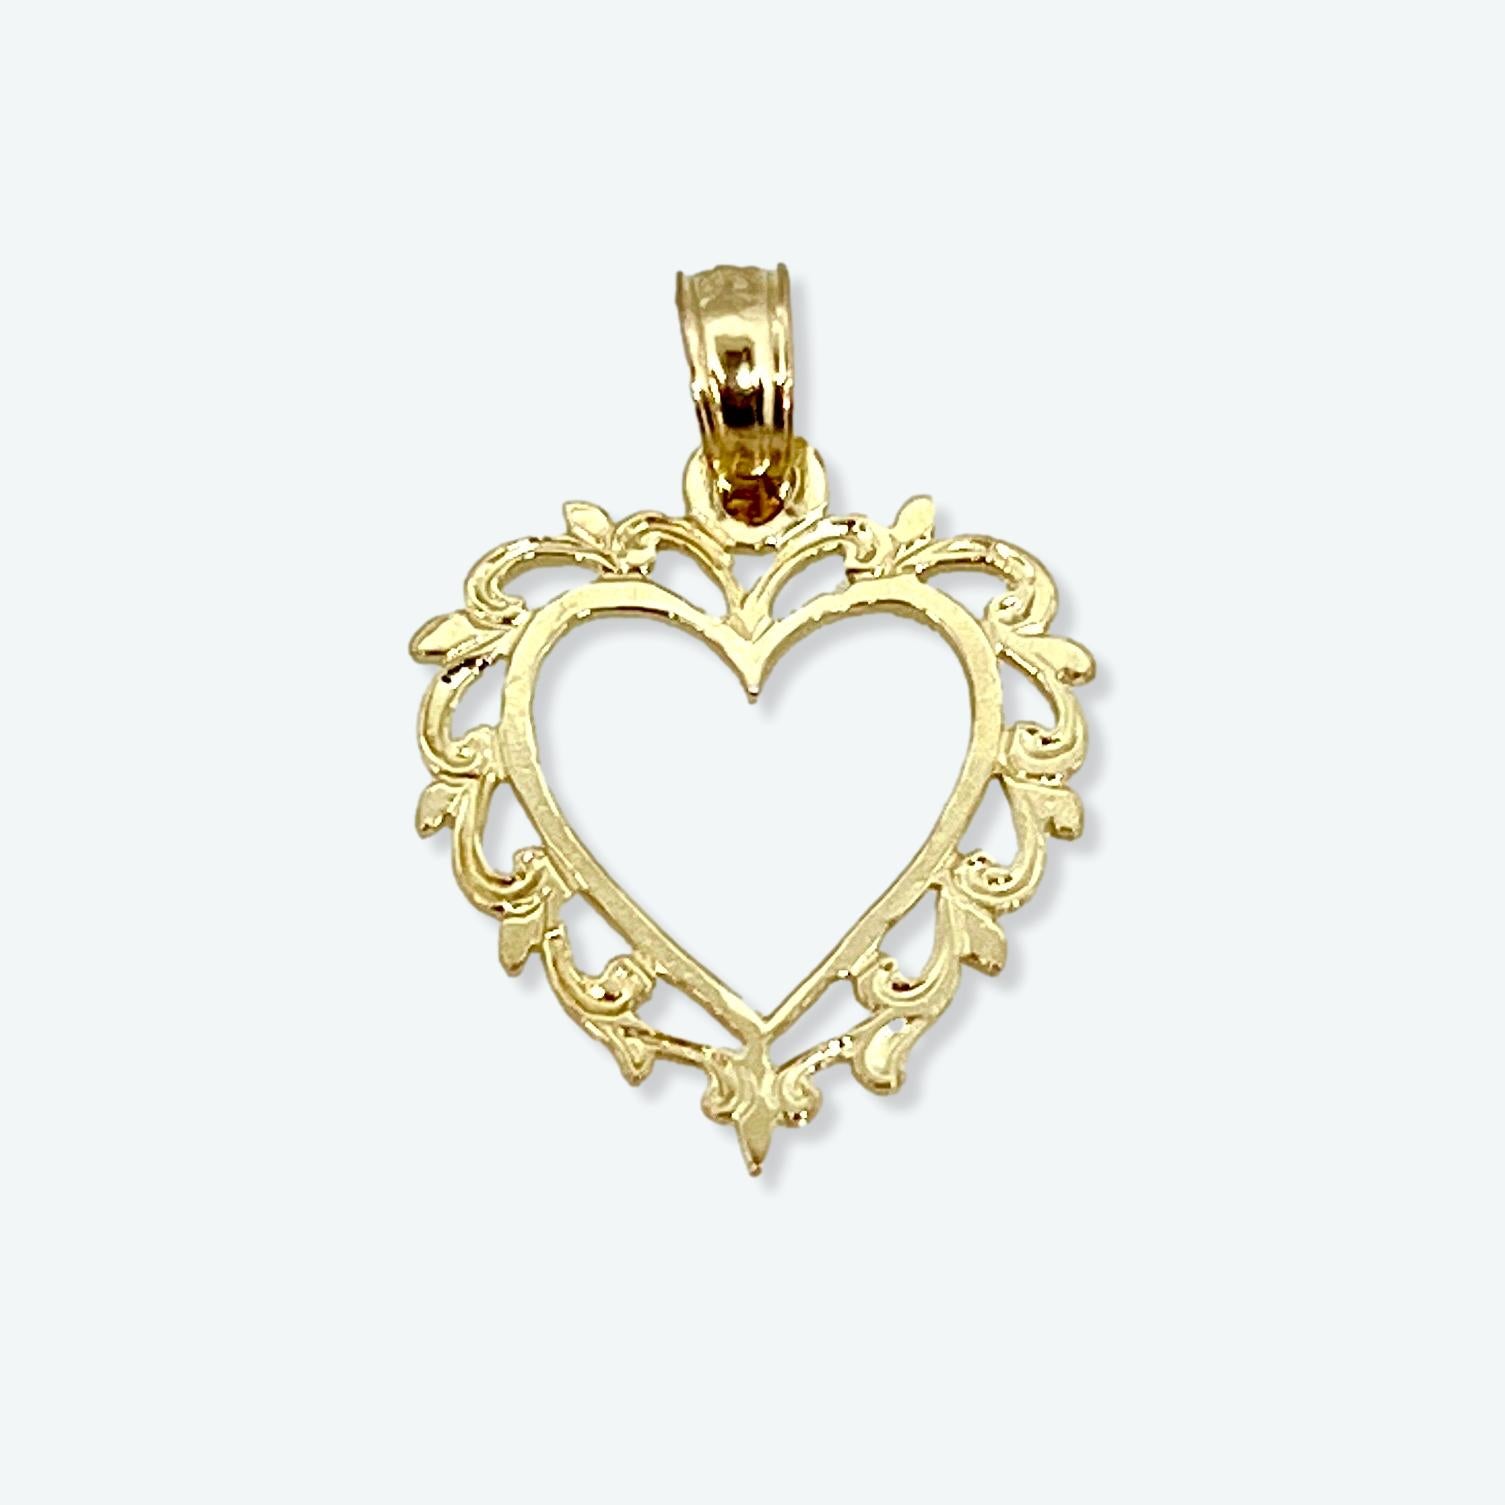 14K Yellow Gold Lace Trim Open Heart Pendant